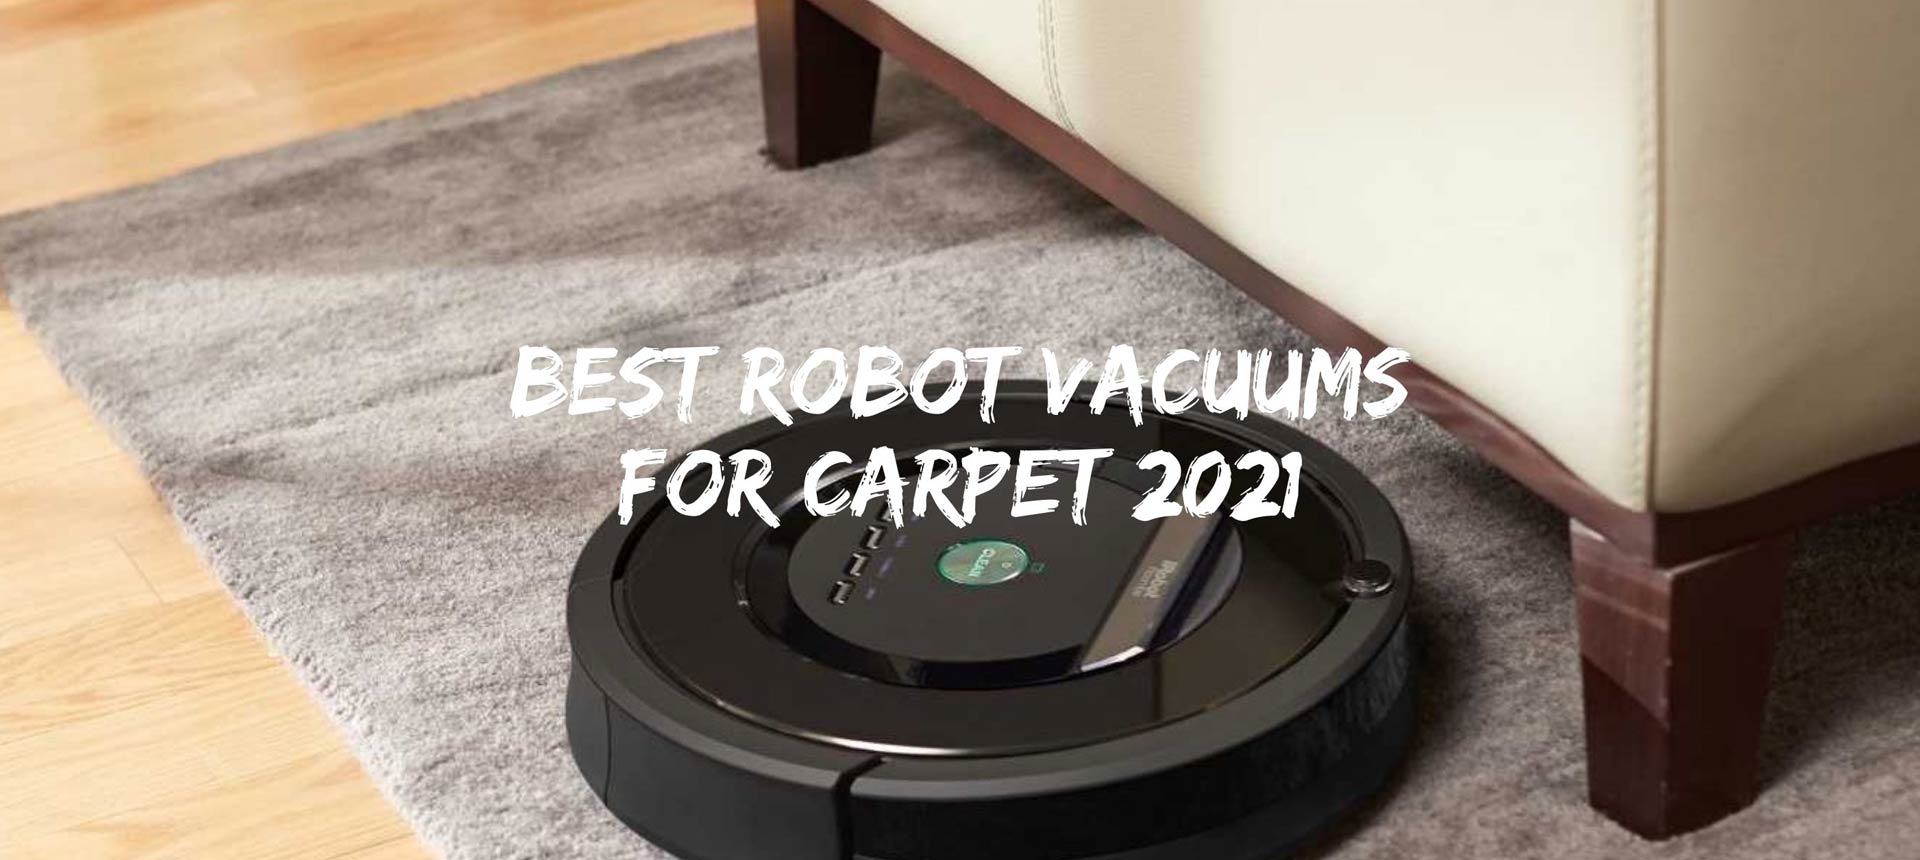 Best Robot Vacuums for Carpet 2021